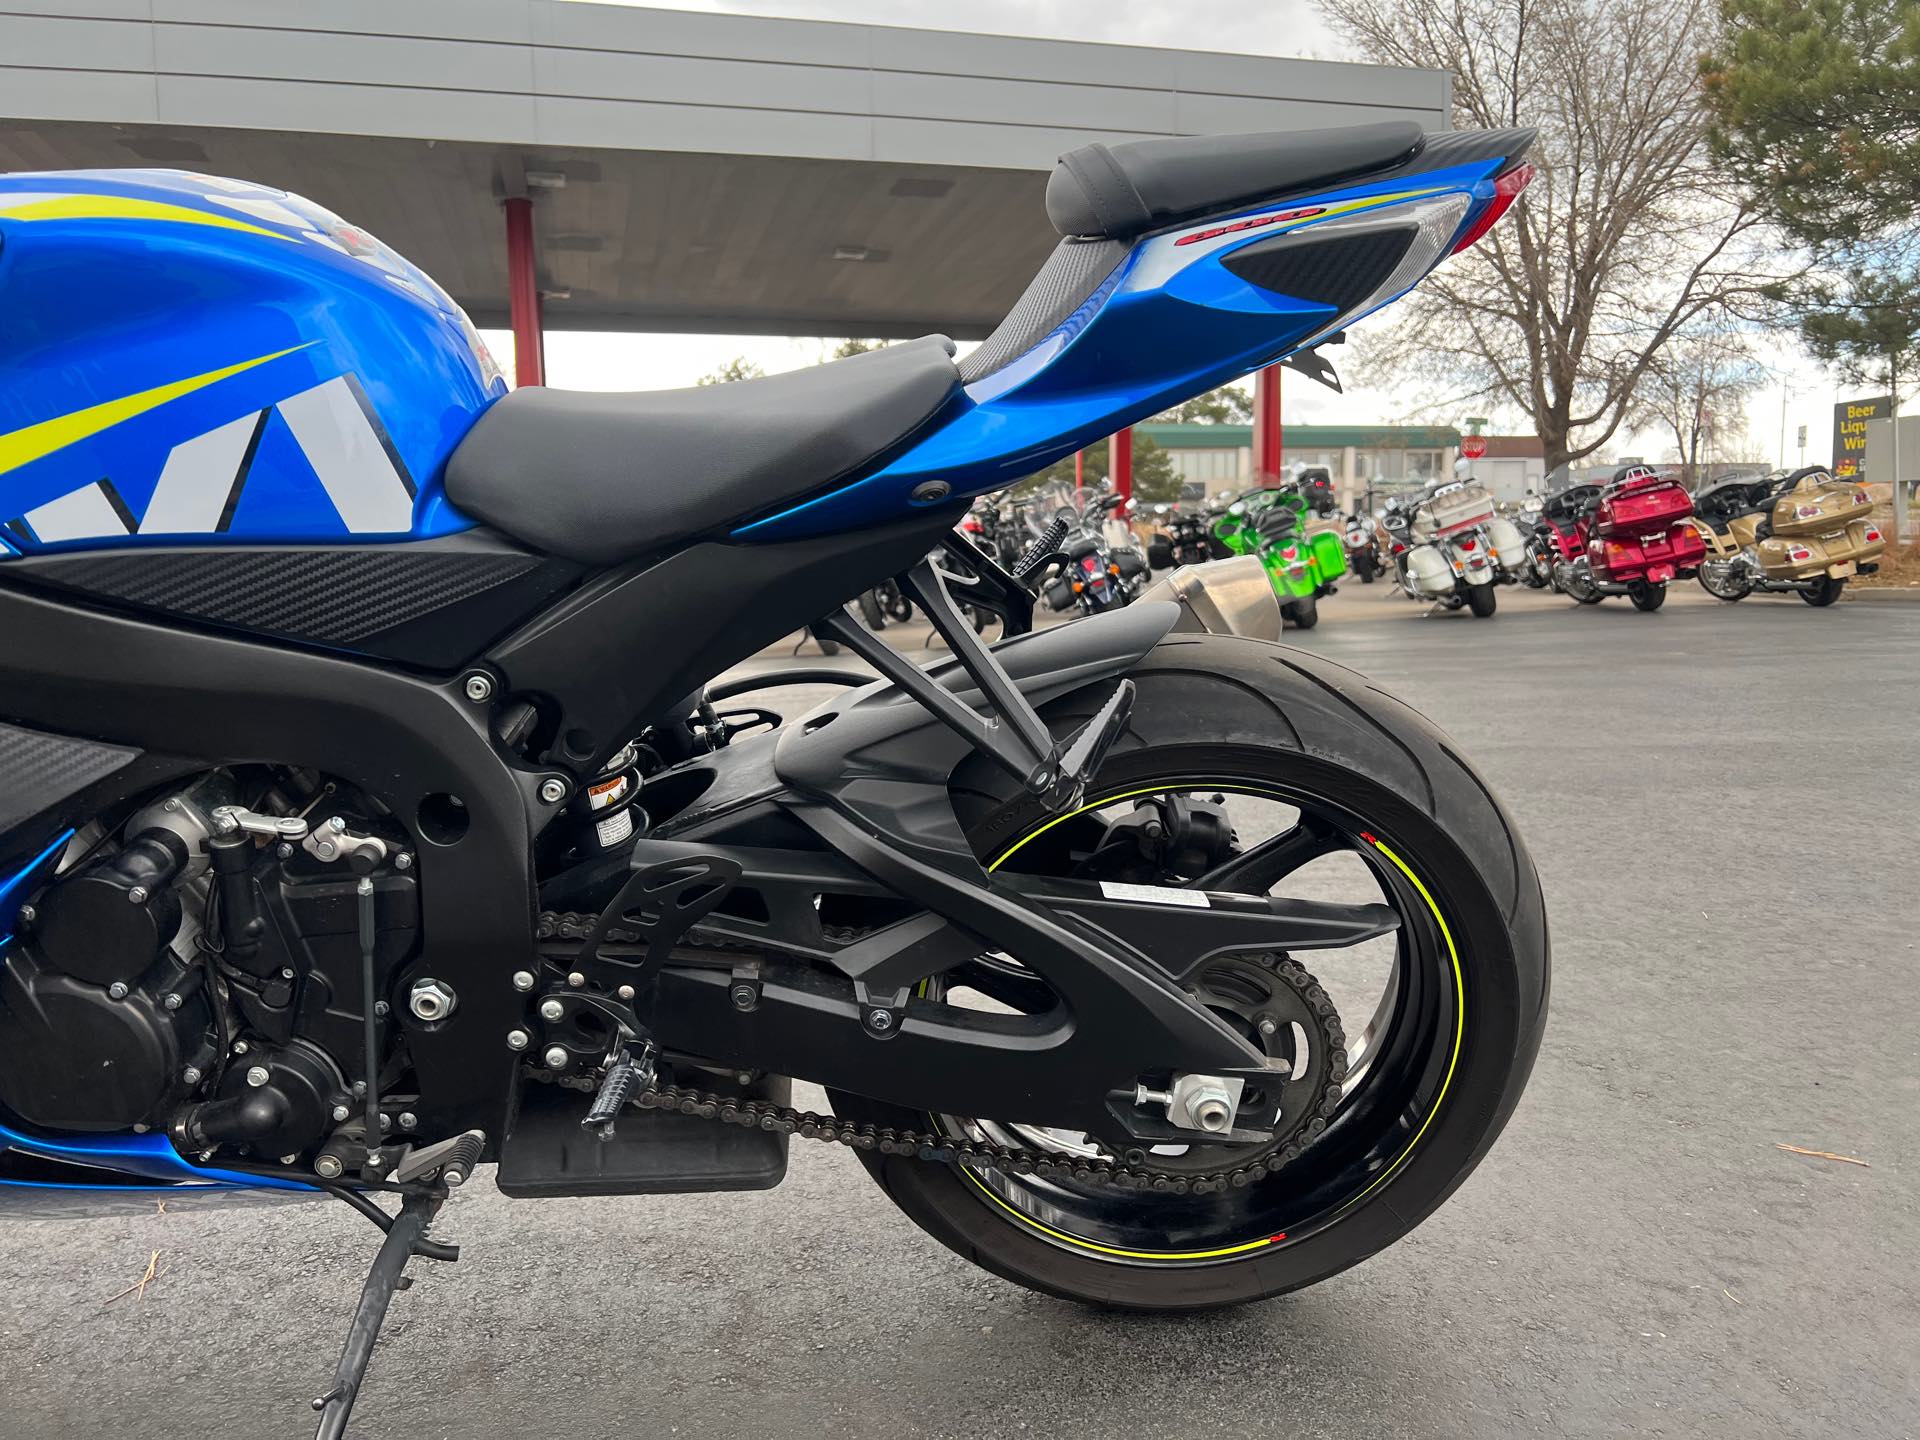 2015 Suzuki GSX-R 600 at Aces Motorcycles - Fort Collins